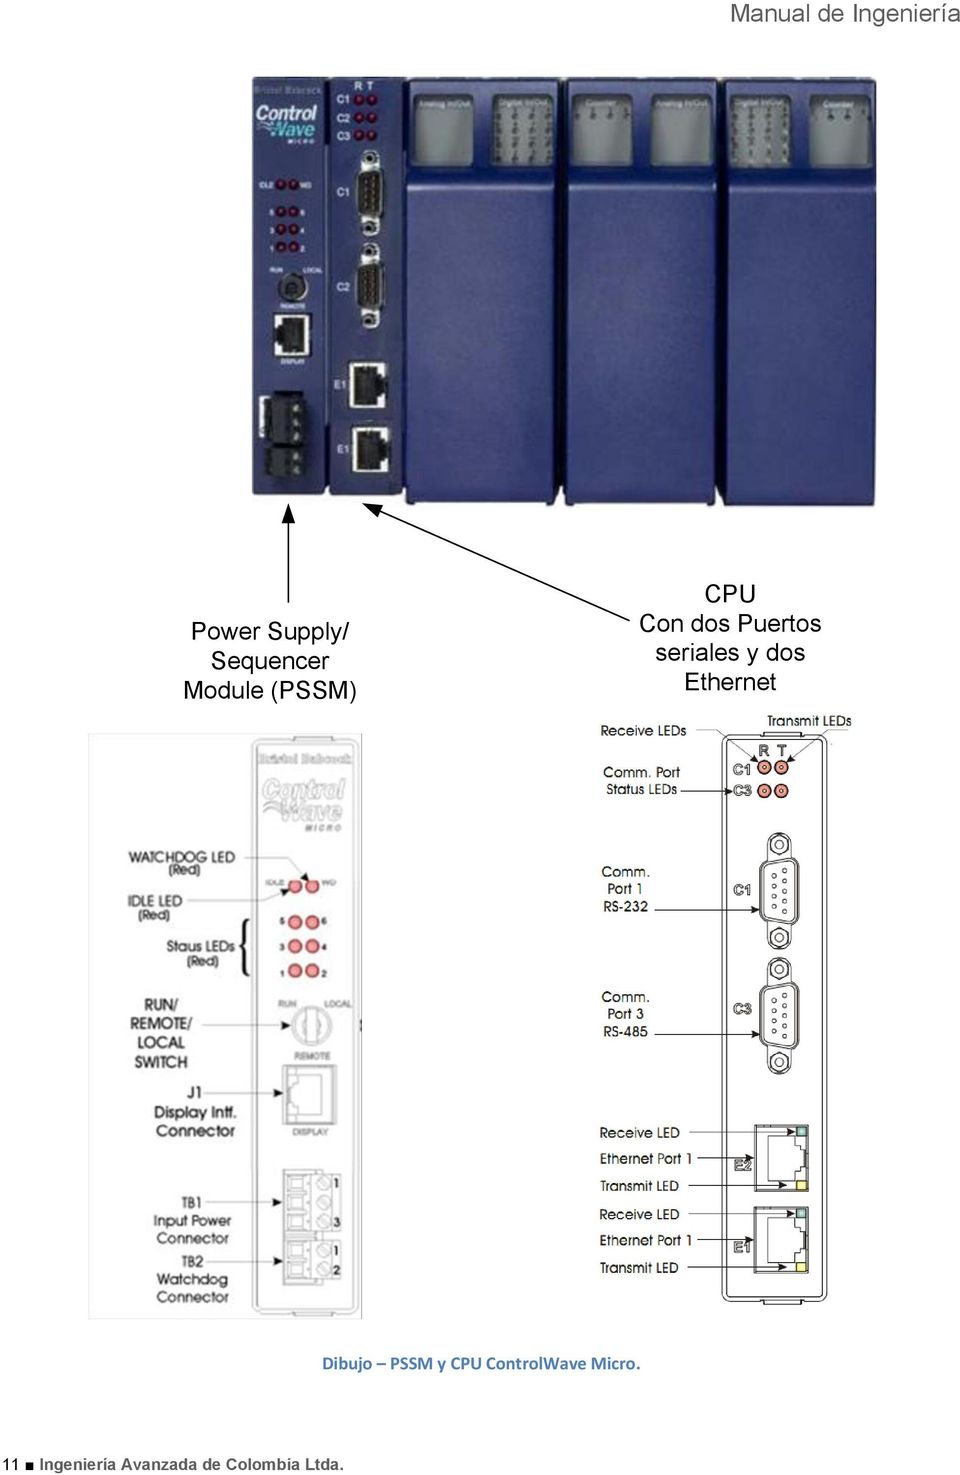 Ethernet Dibujo PSSM y CPU ControlWave